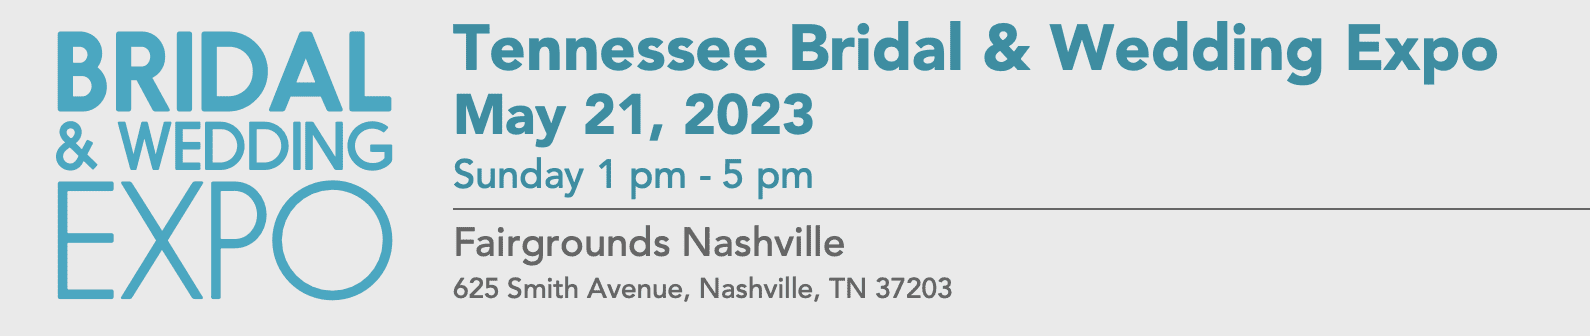 Tennessee Bridal & Wedding Expo in Nashville TN.